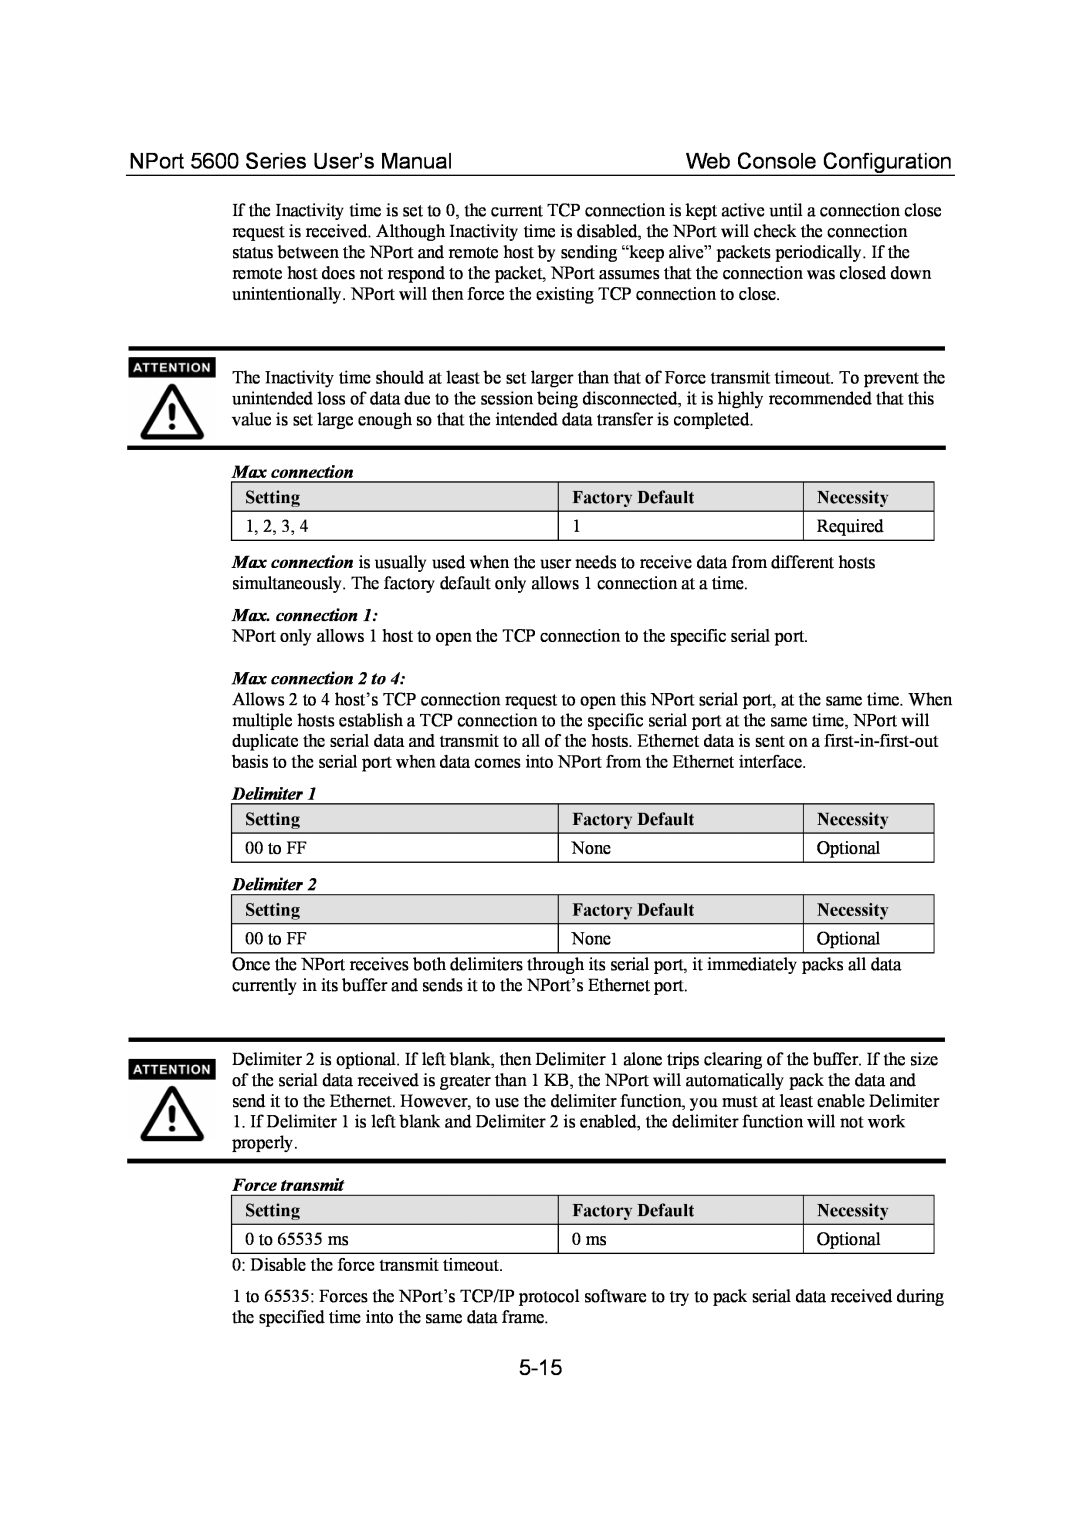 Moxa Technologies user manual 5-15, NPort 5600 Series User’s Manual, Web Console Configuration 